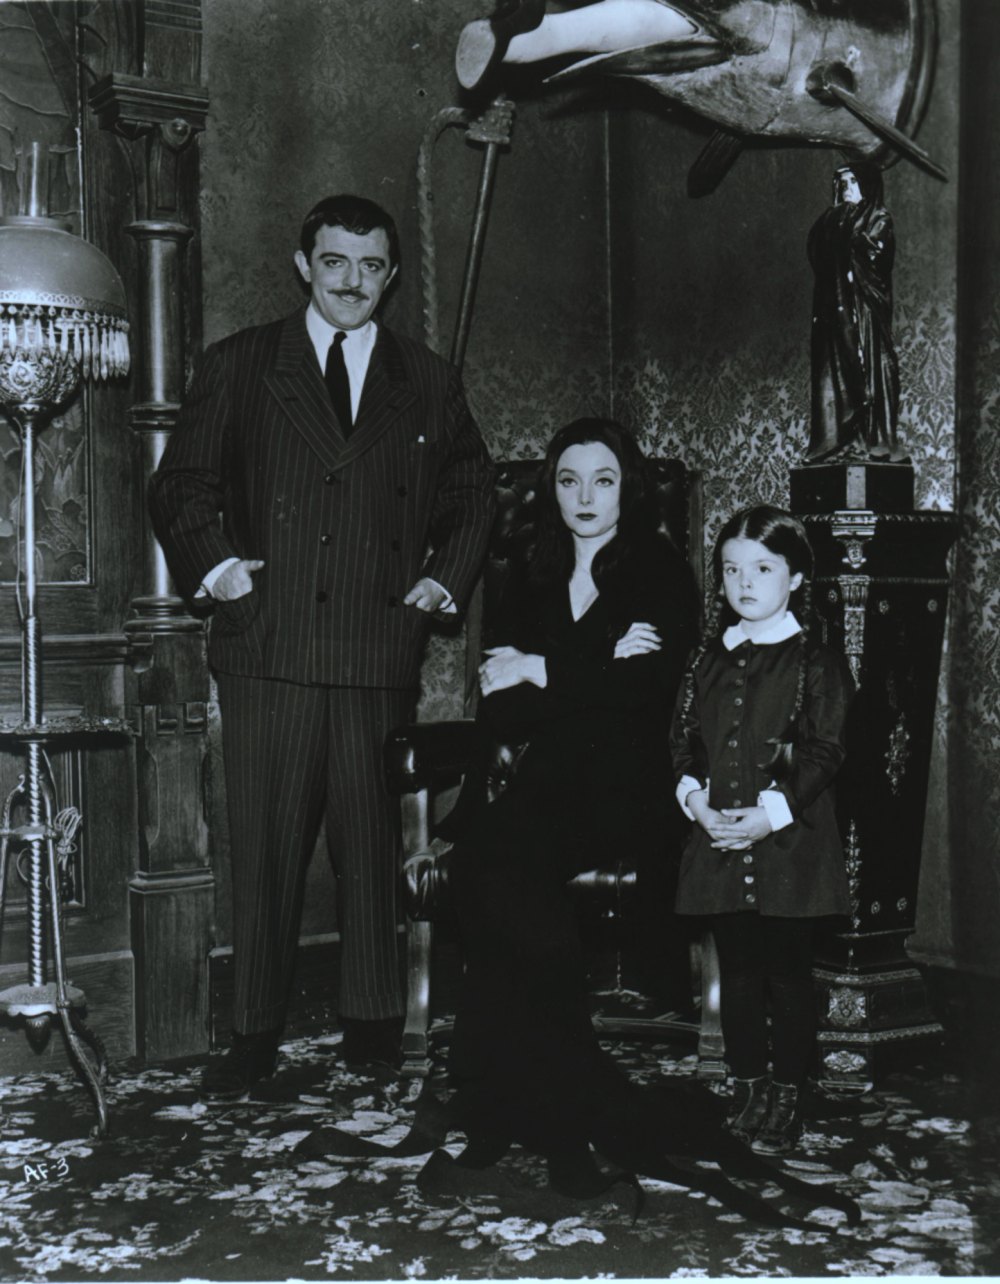 Lisa Loring, actress who played original Wednesday Addams, dies at